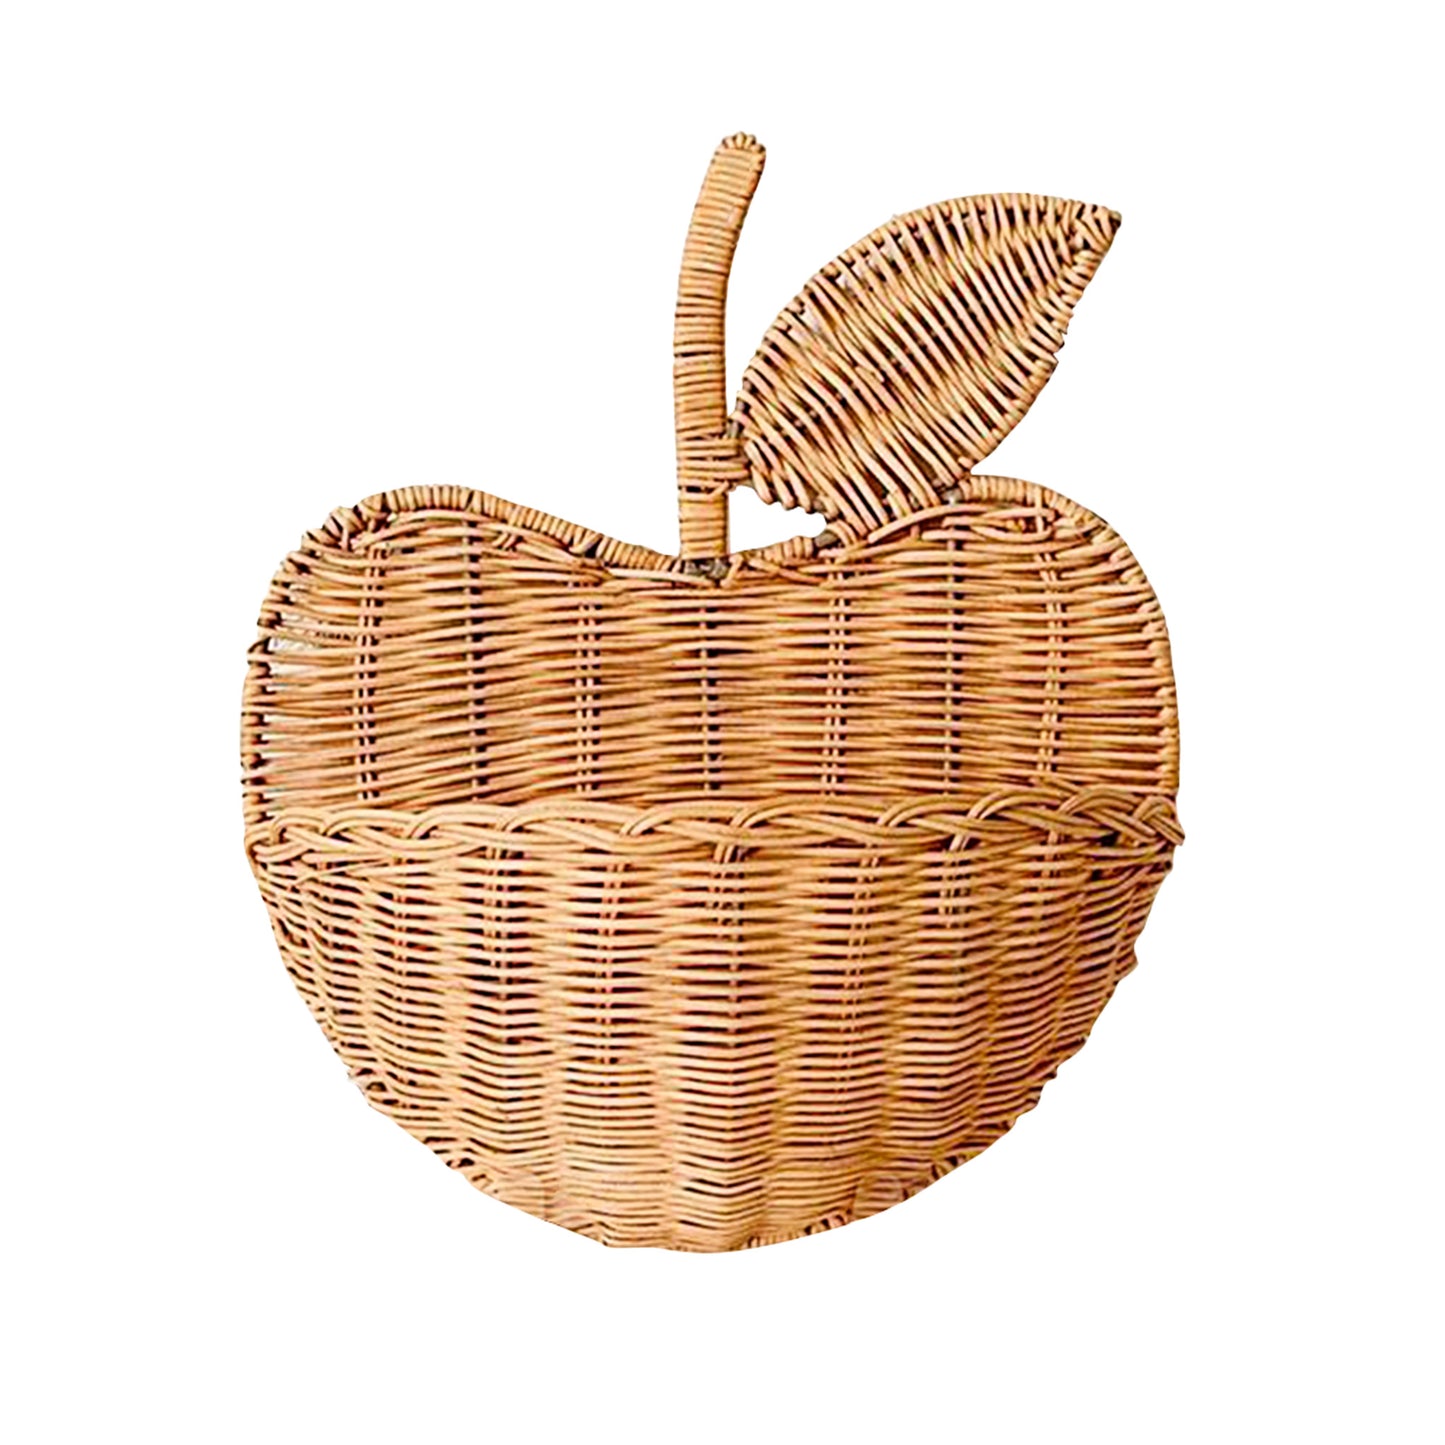 Apple Basket